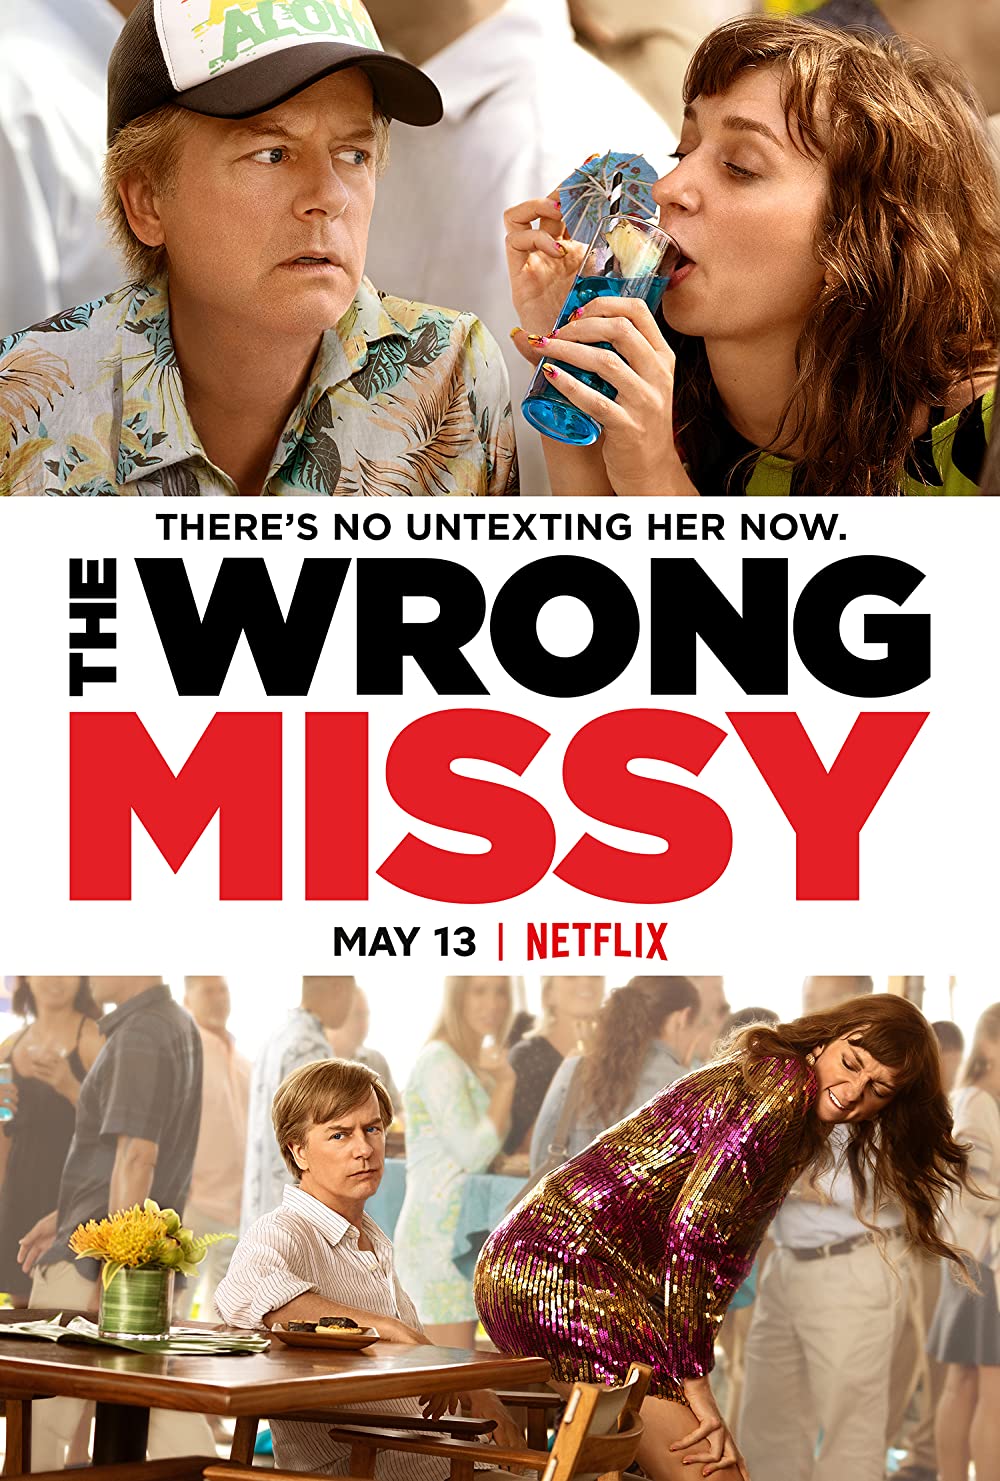 Filmbeschreibung zu The Wrong Missy